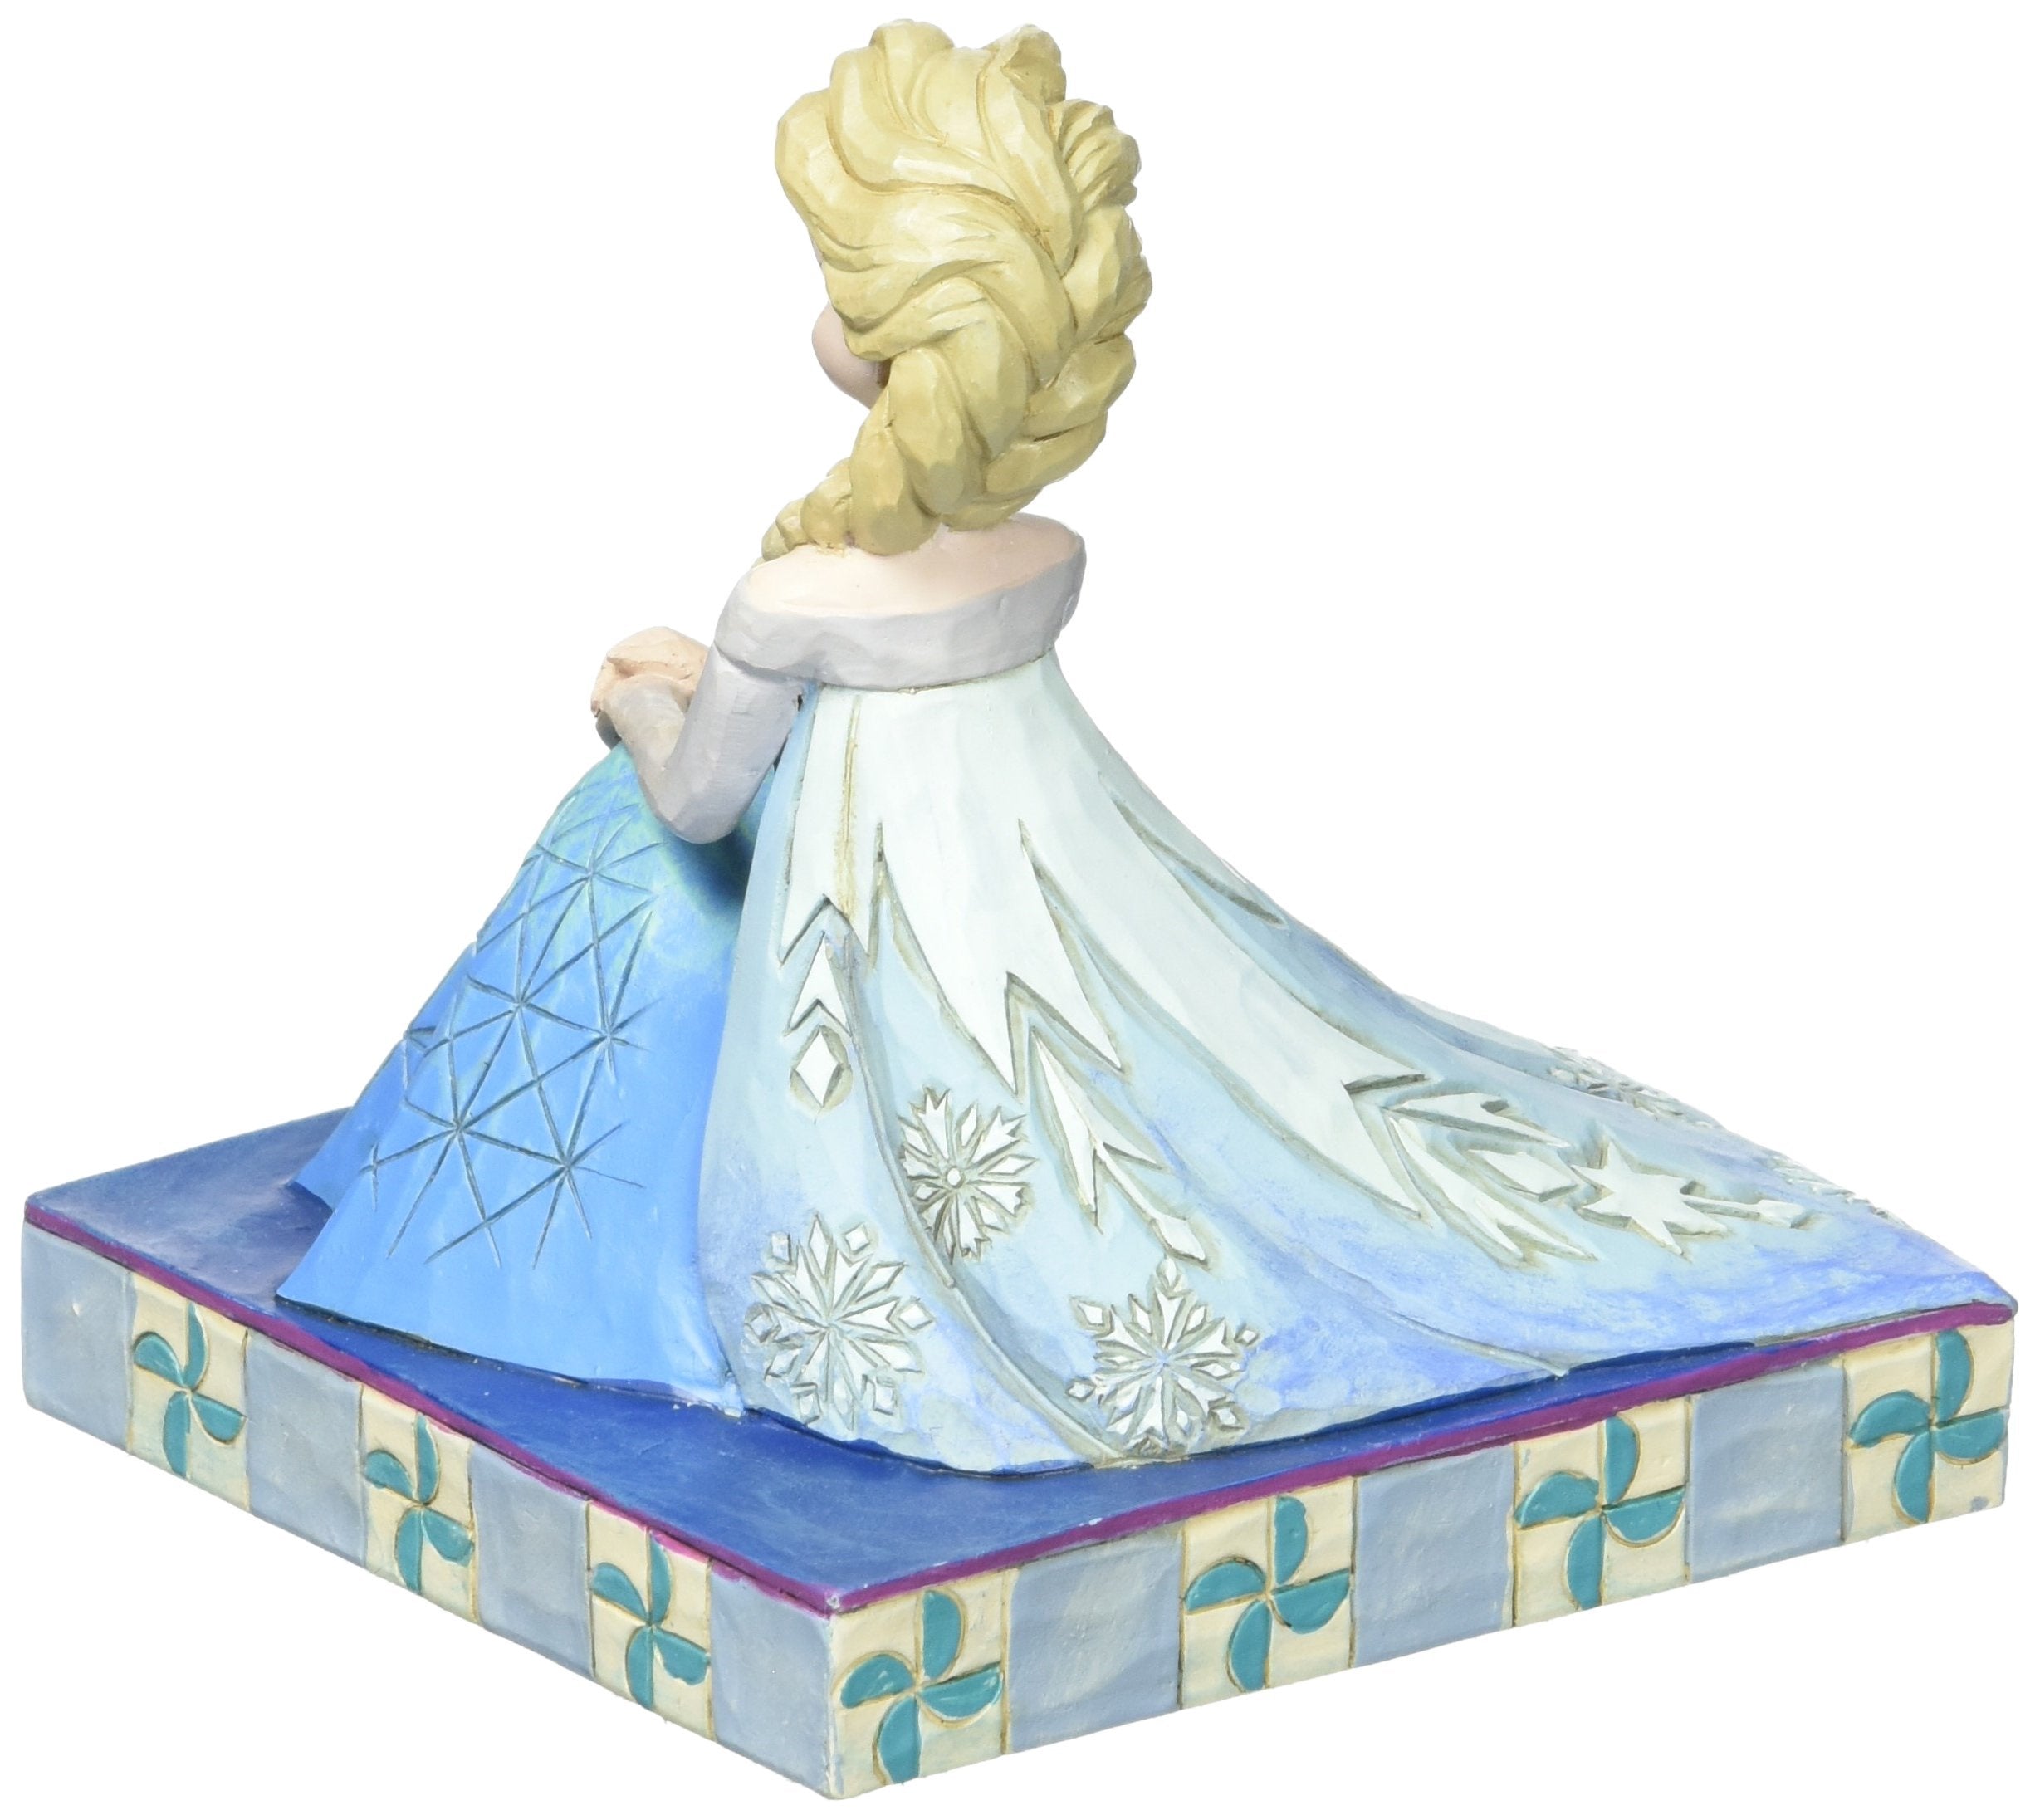 Jim Shore Disney Frozen Be Yourself Elsa Personality Pose Figurine 4050406 New